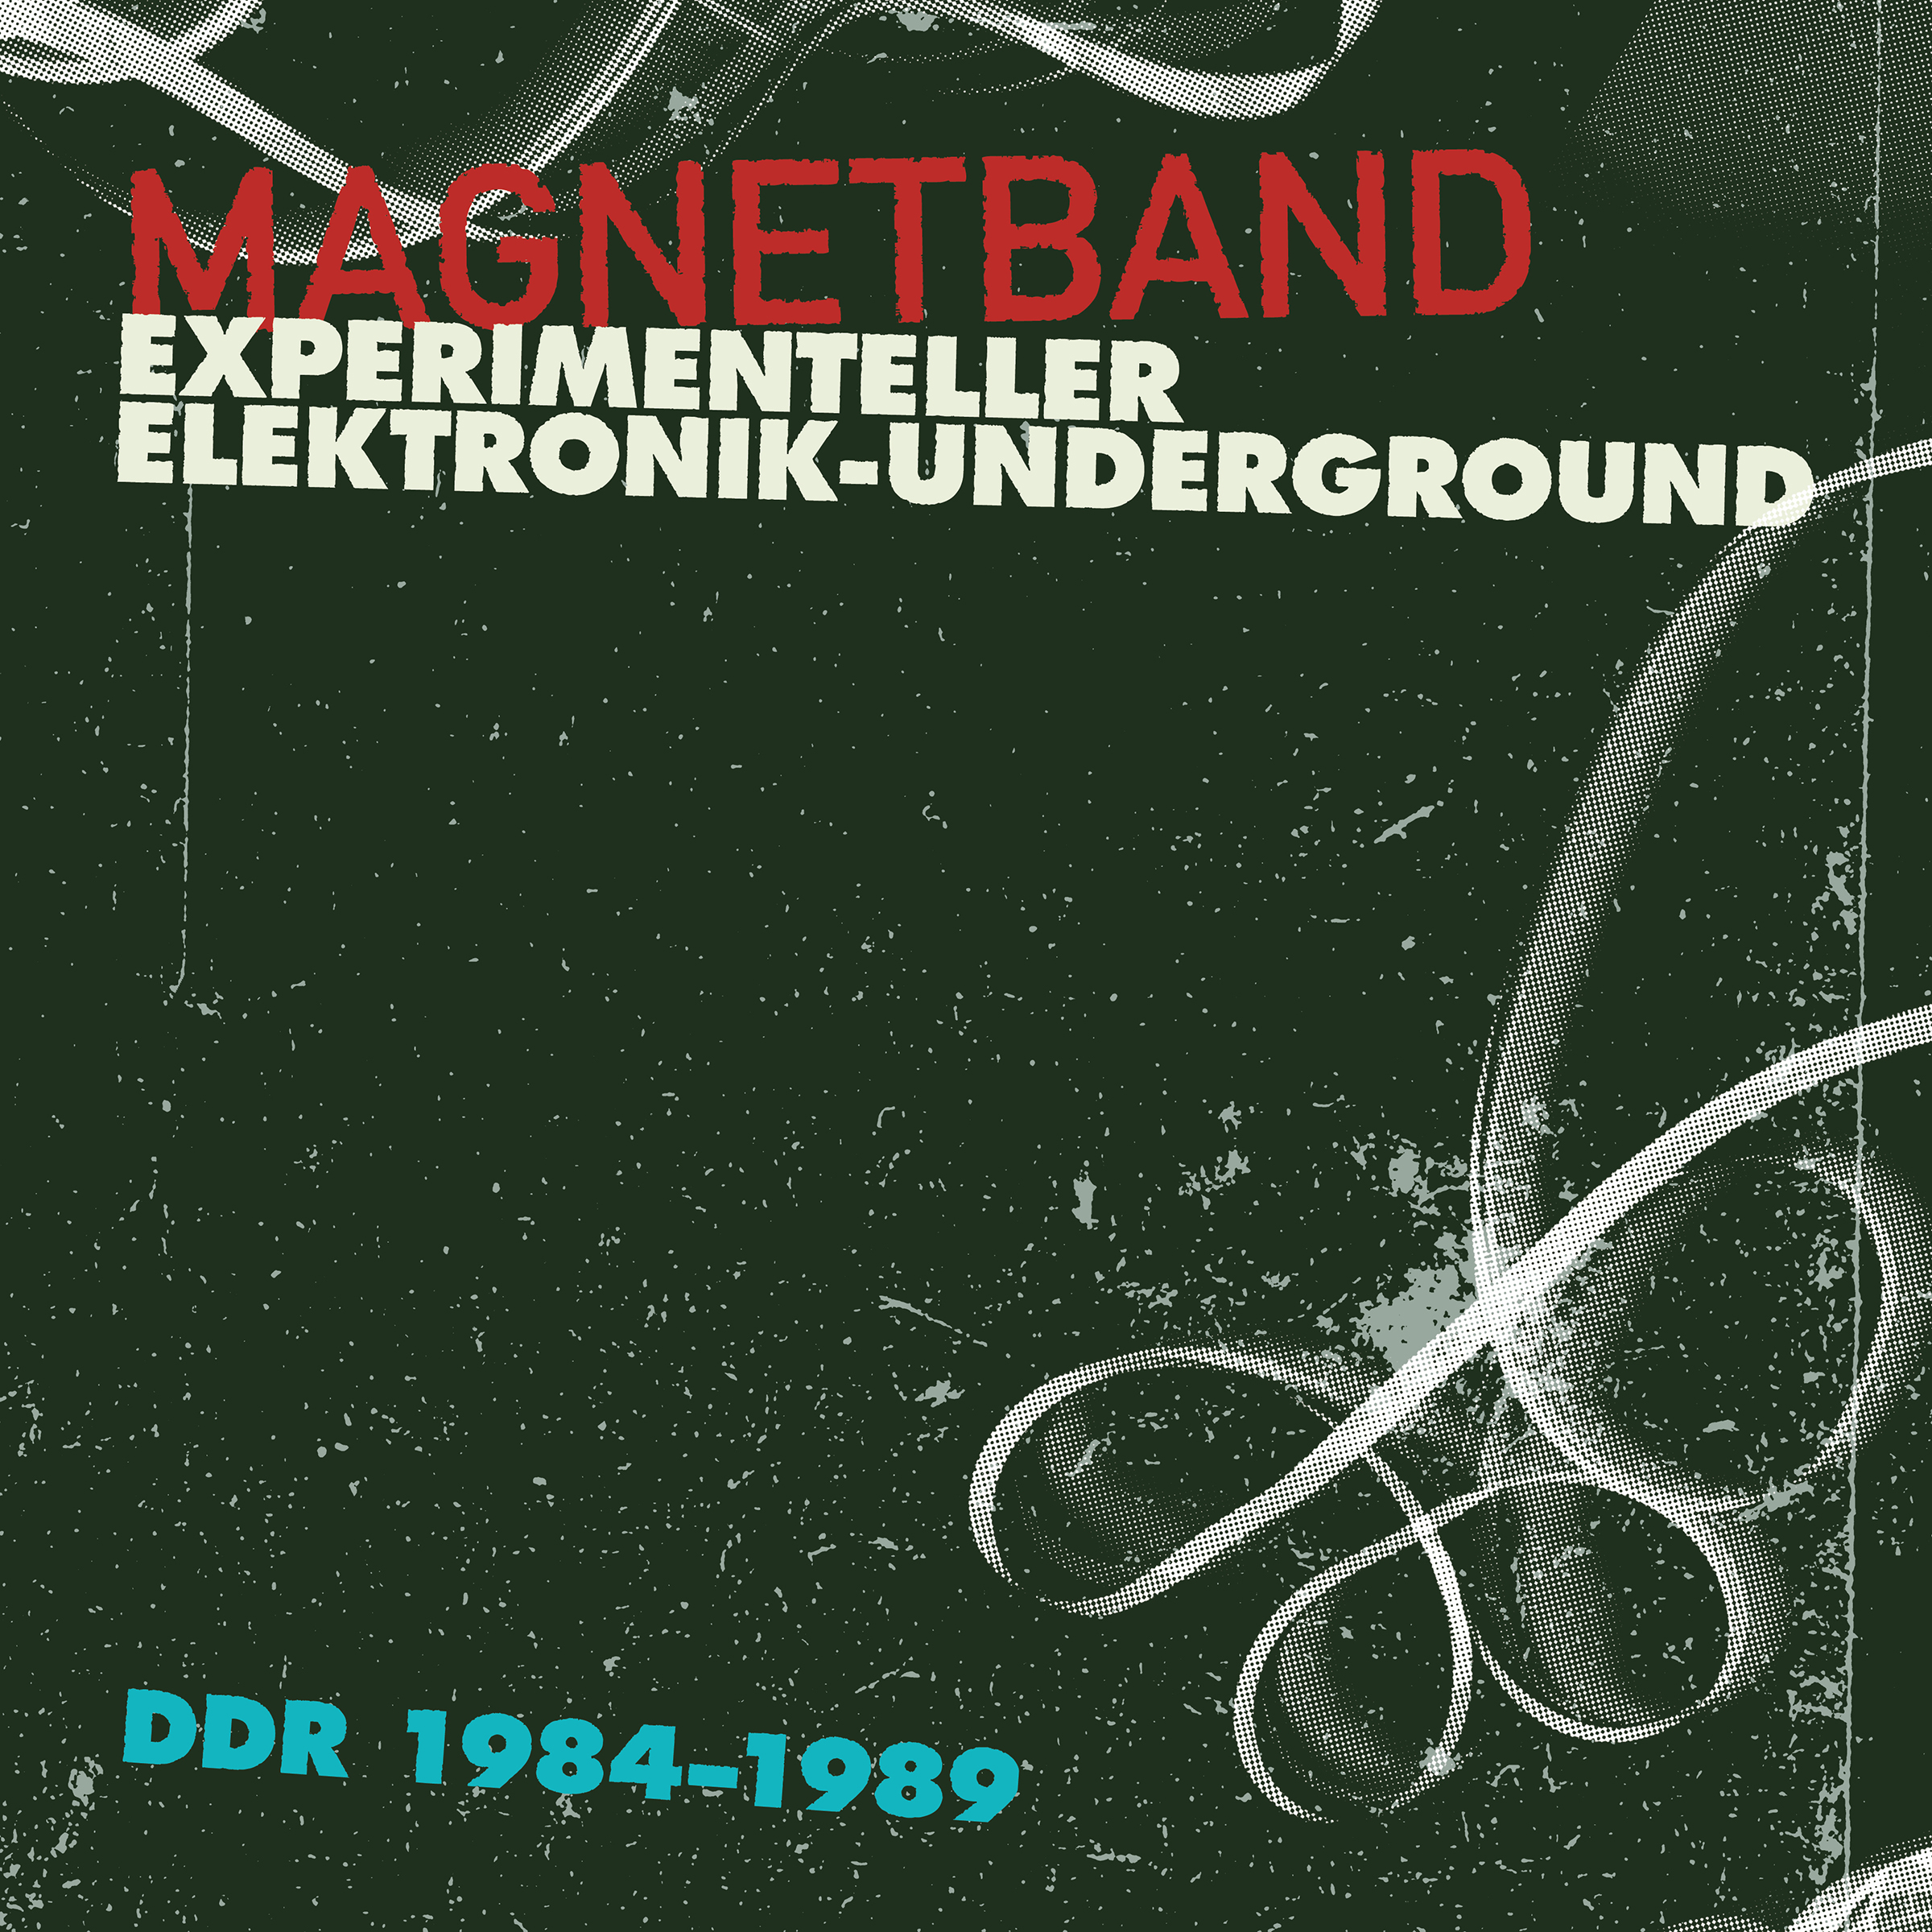 Magnetband - Experimenteller Elektronik-Underground DDR 1984-1989